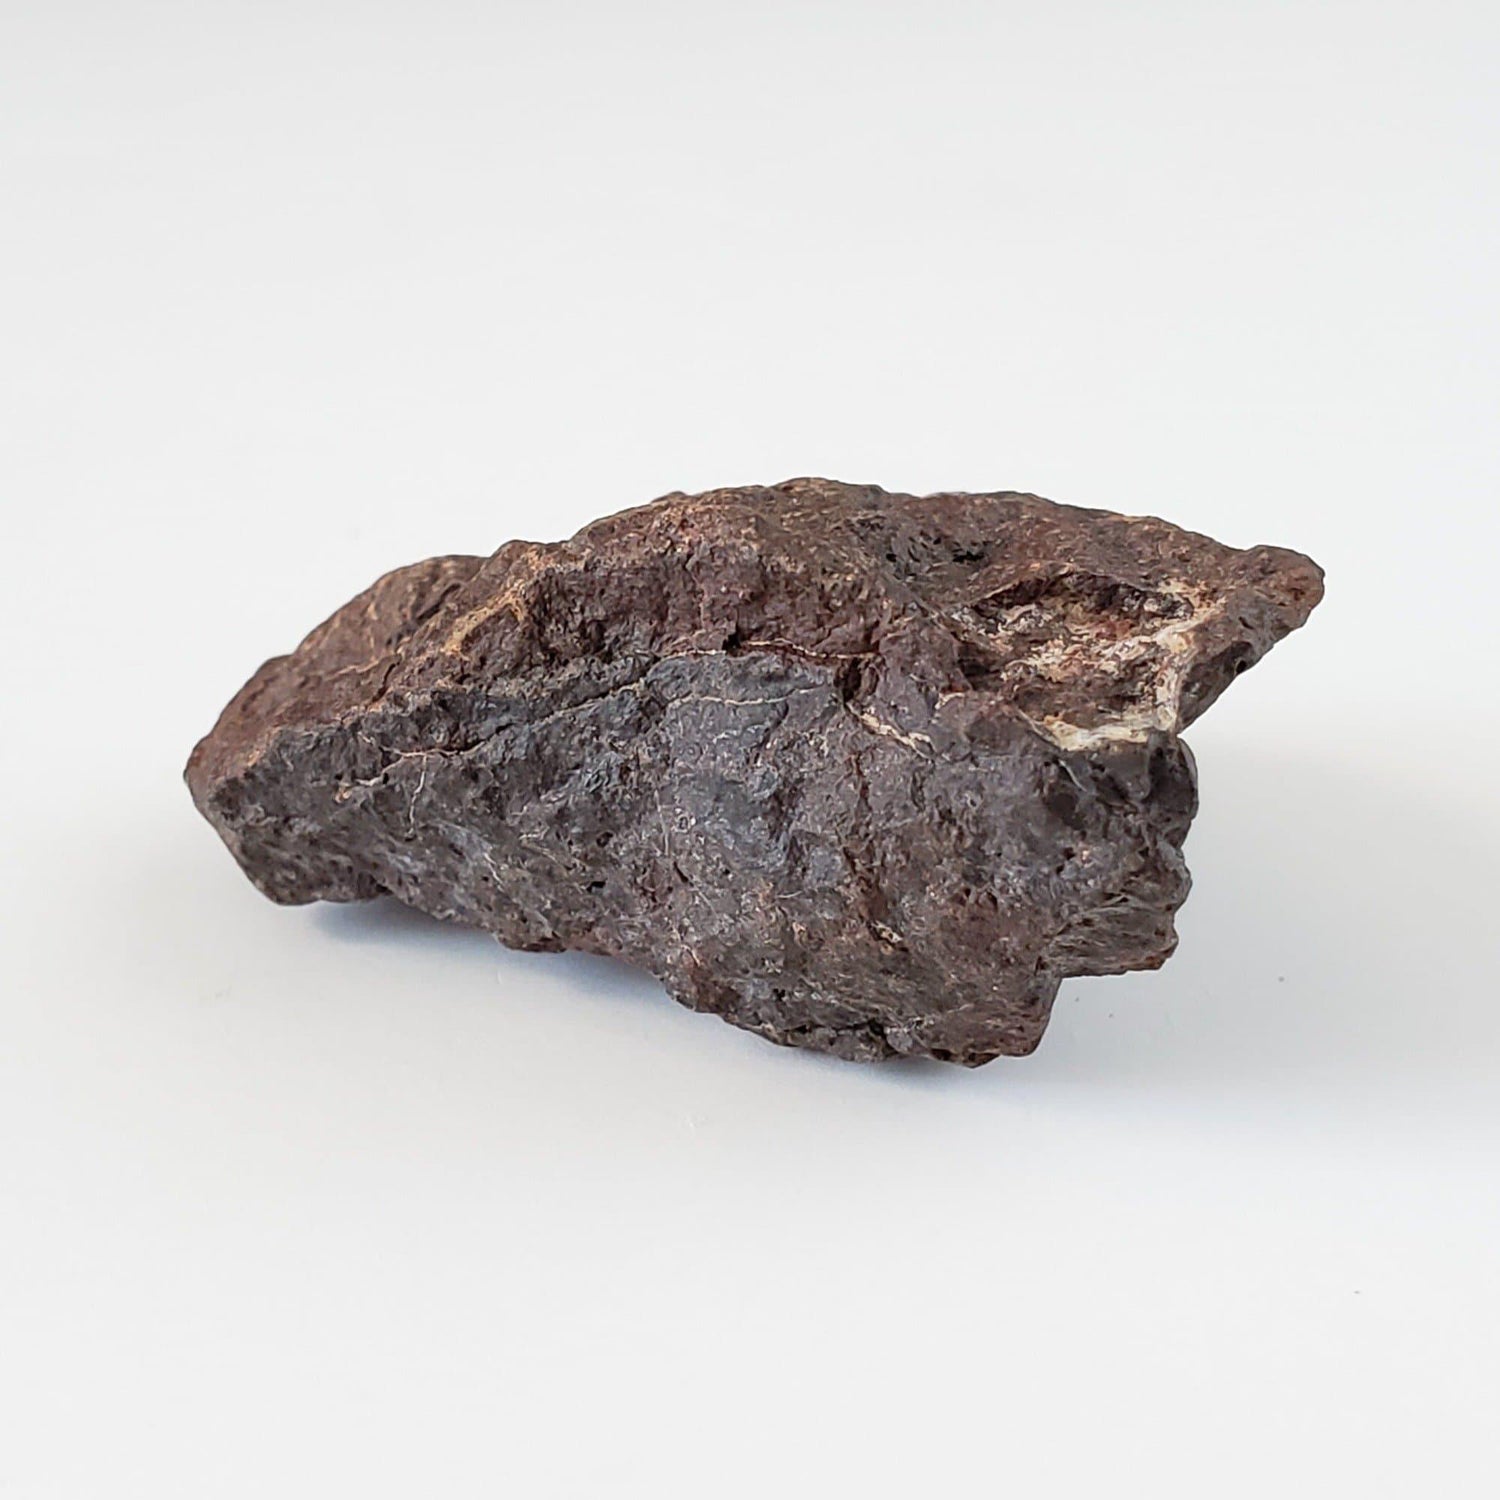 Dhofar 221 Meteorite | 15.38 Grams | Individual | L5 Shocked Chondrite | Sahara